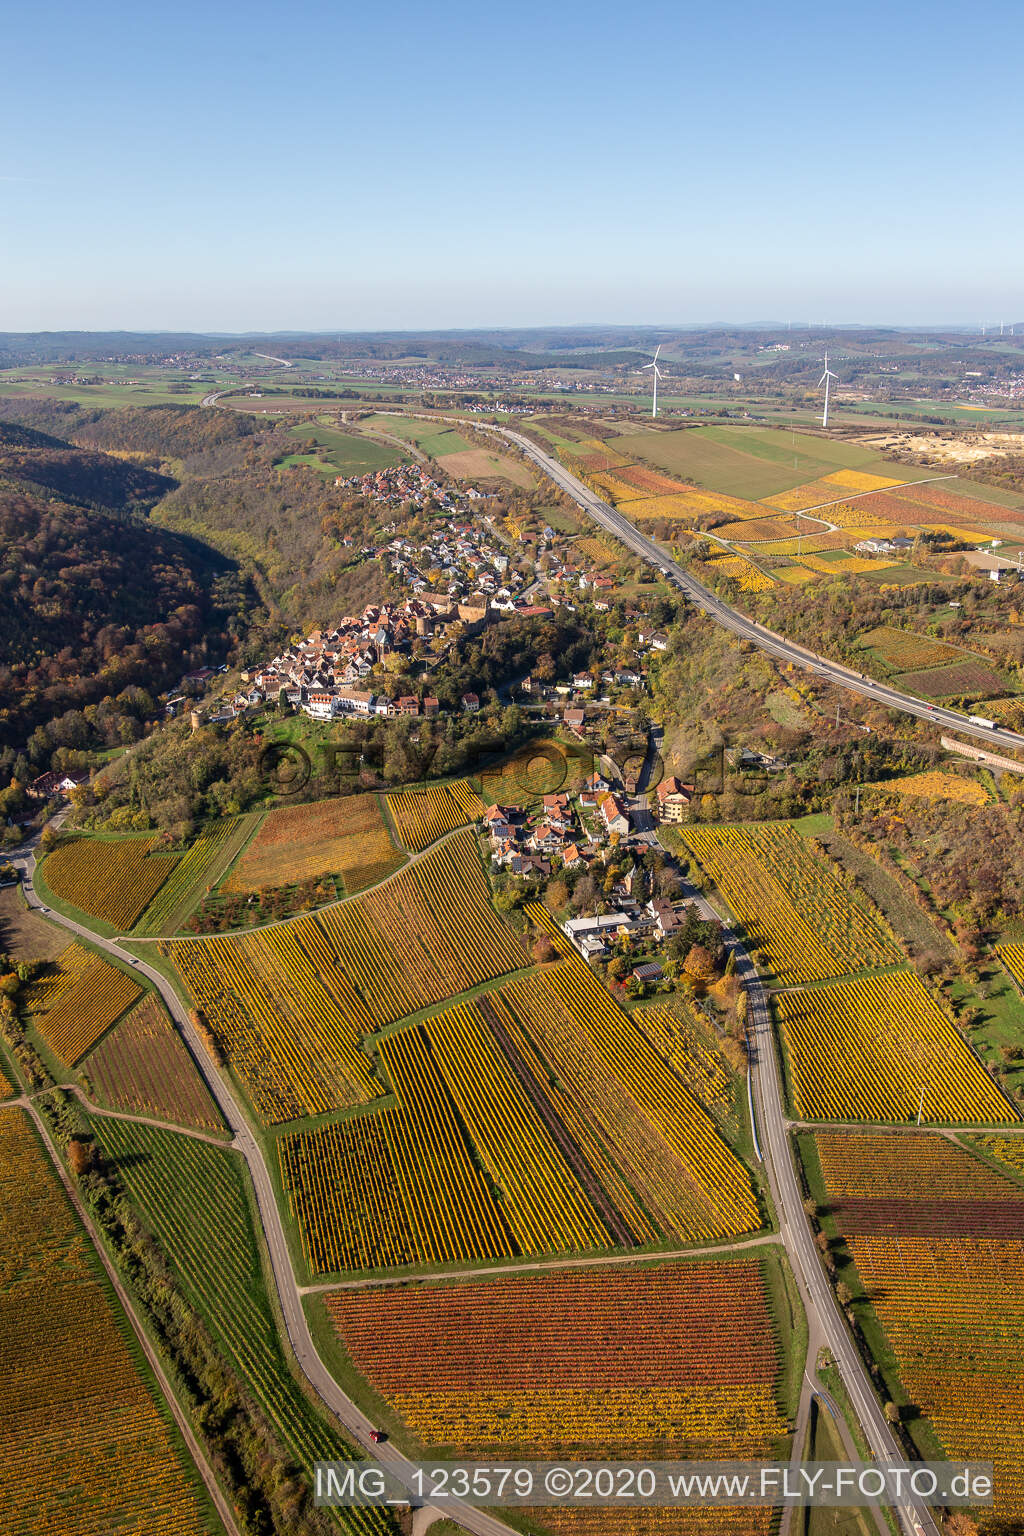 Drone image of Neuleiningen in the state Rhineland-Palatinate, Germany